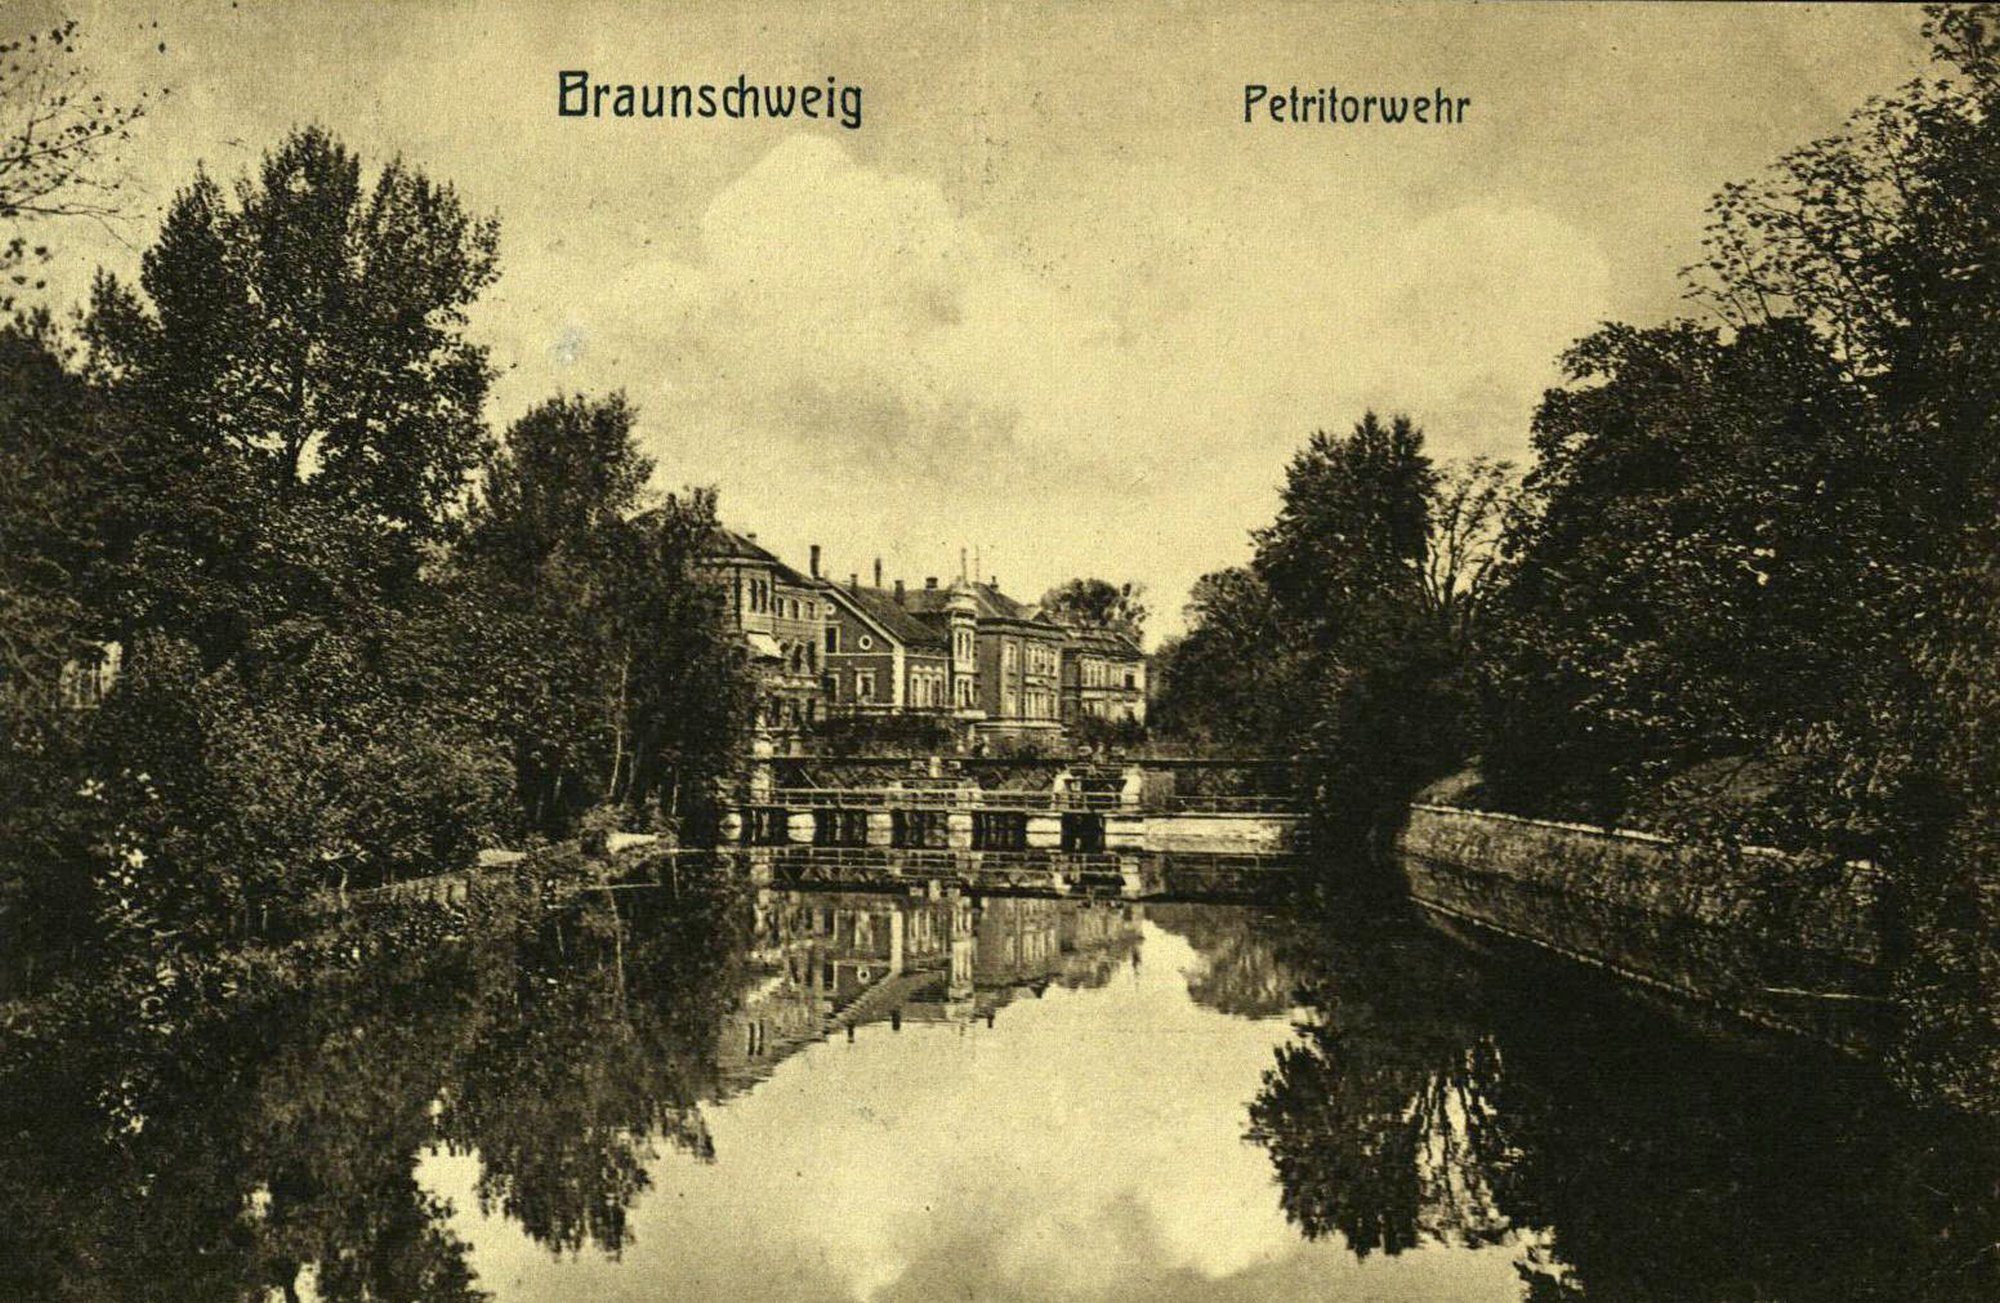 Petriwehrbrücke, Südwestansicht, um 1900